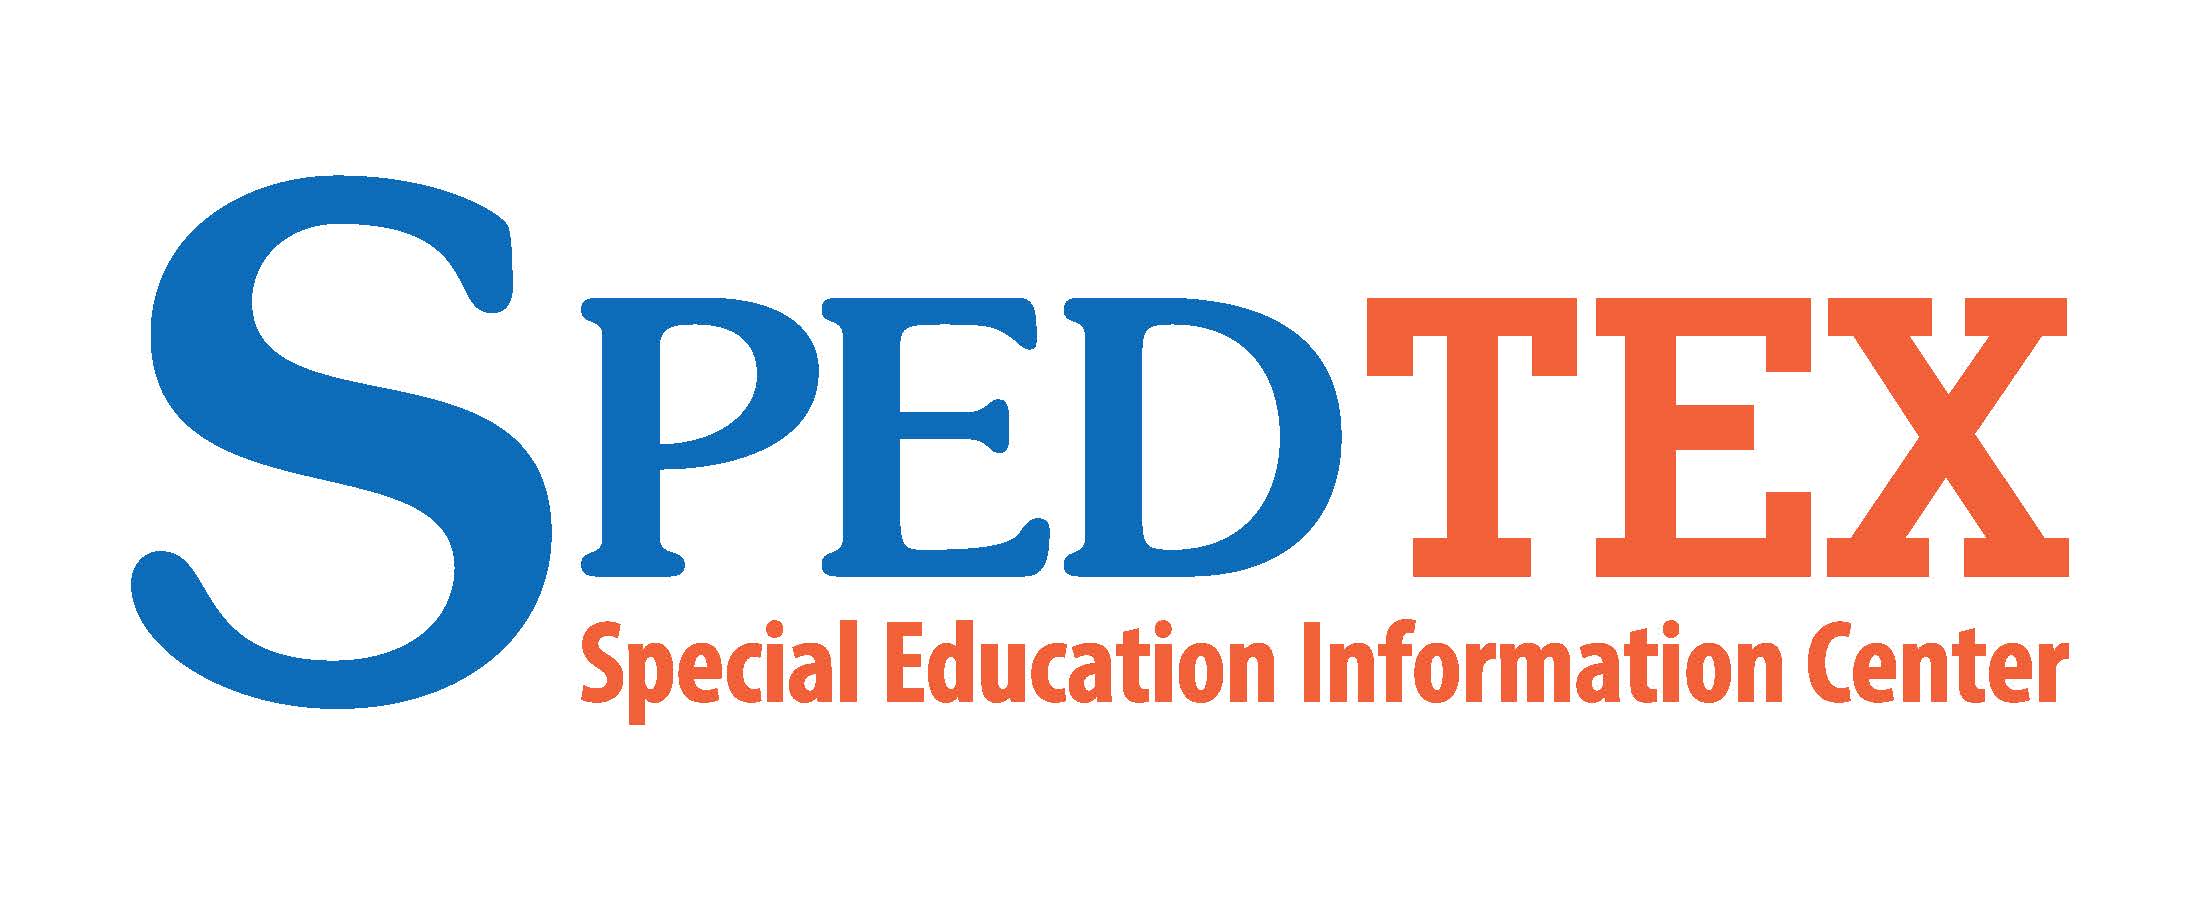 SpedTex Special Education Informaiton Center